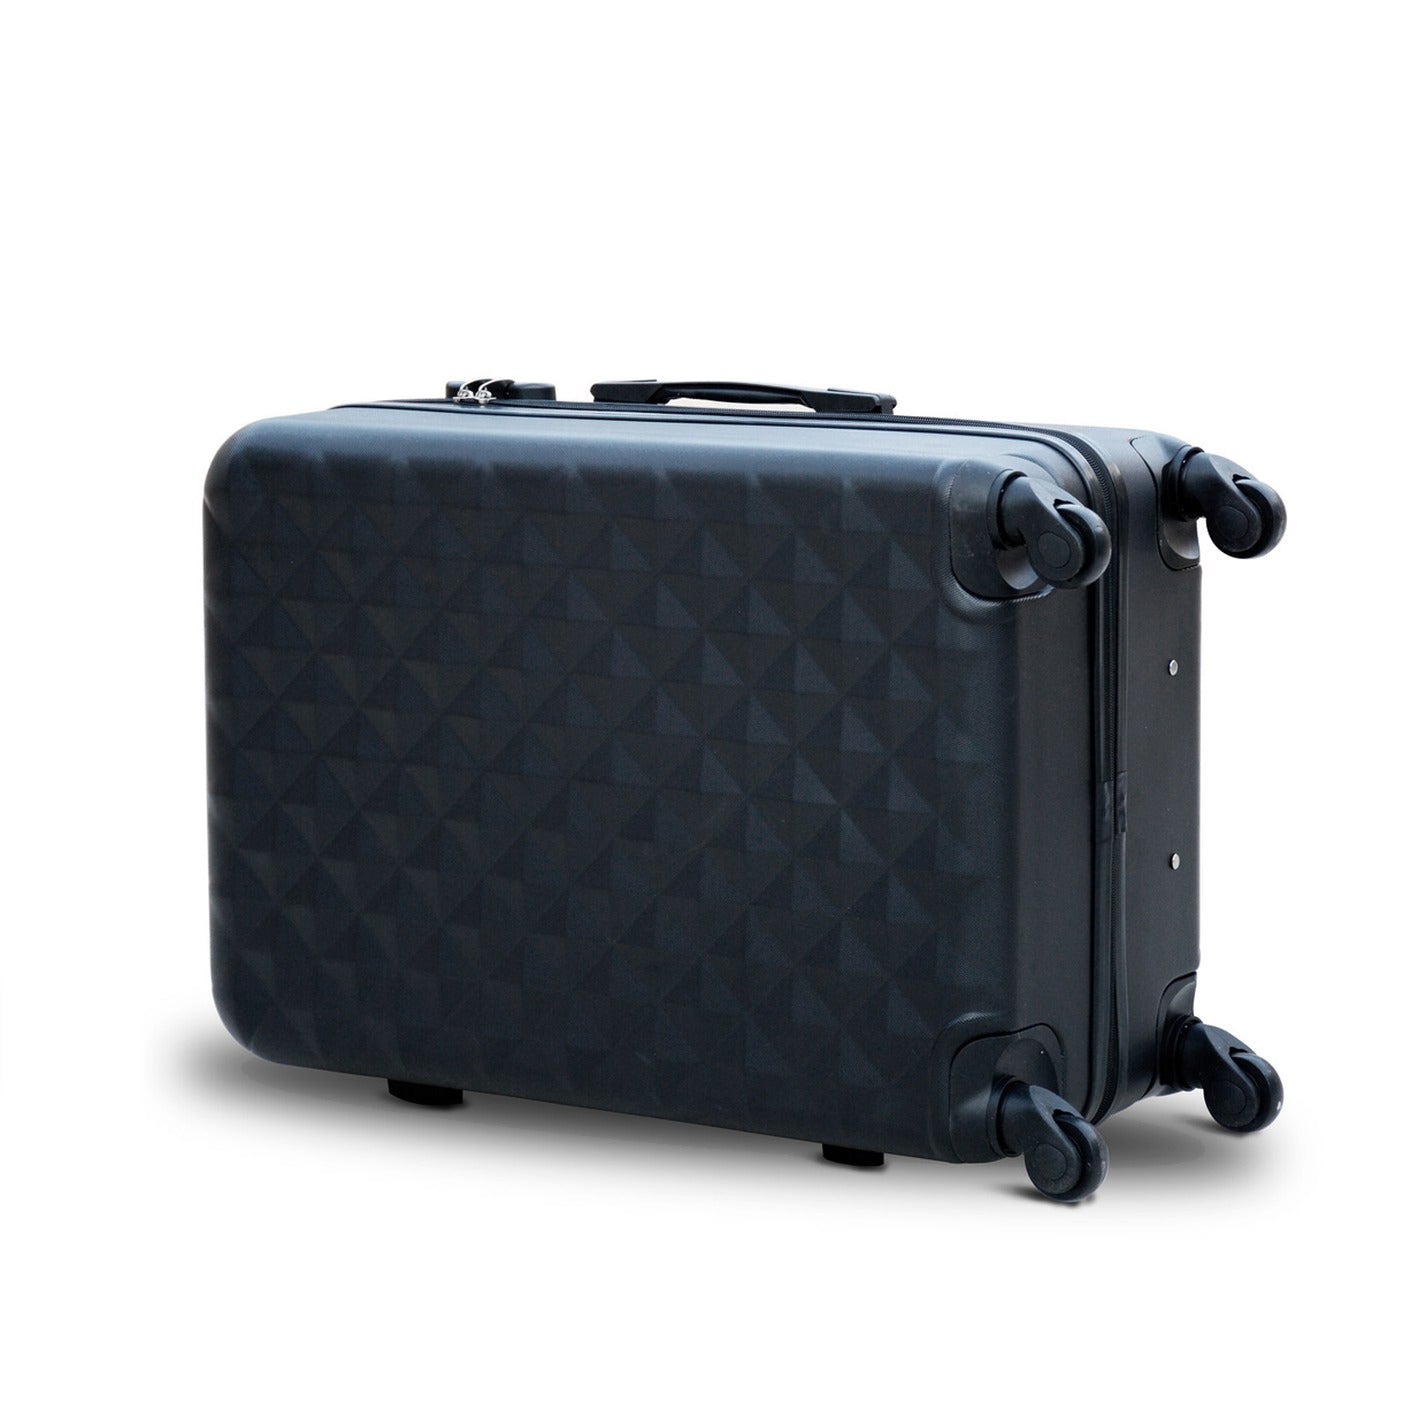 28" Black Diamond Cut ABS Lightweight Luggage Bag With Spinner Wheel